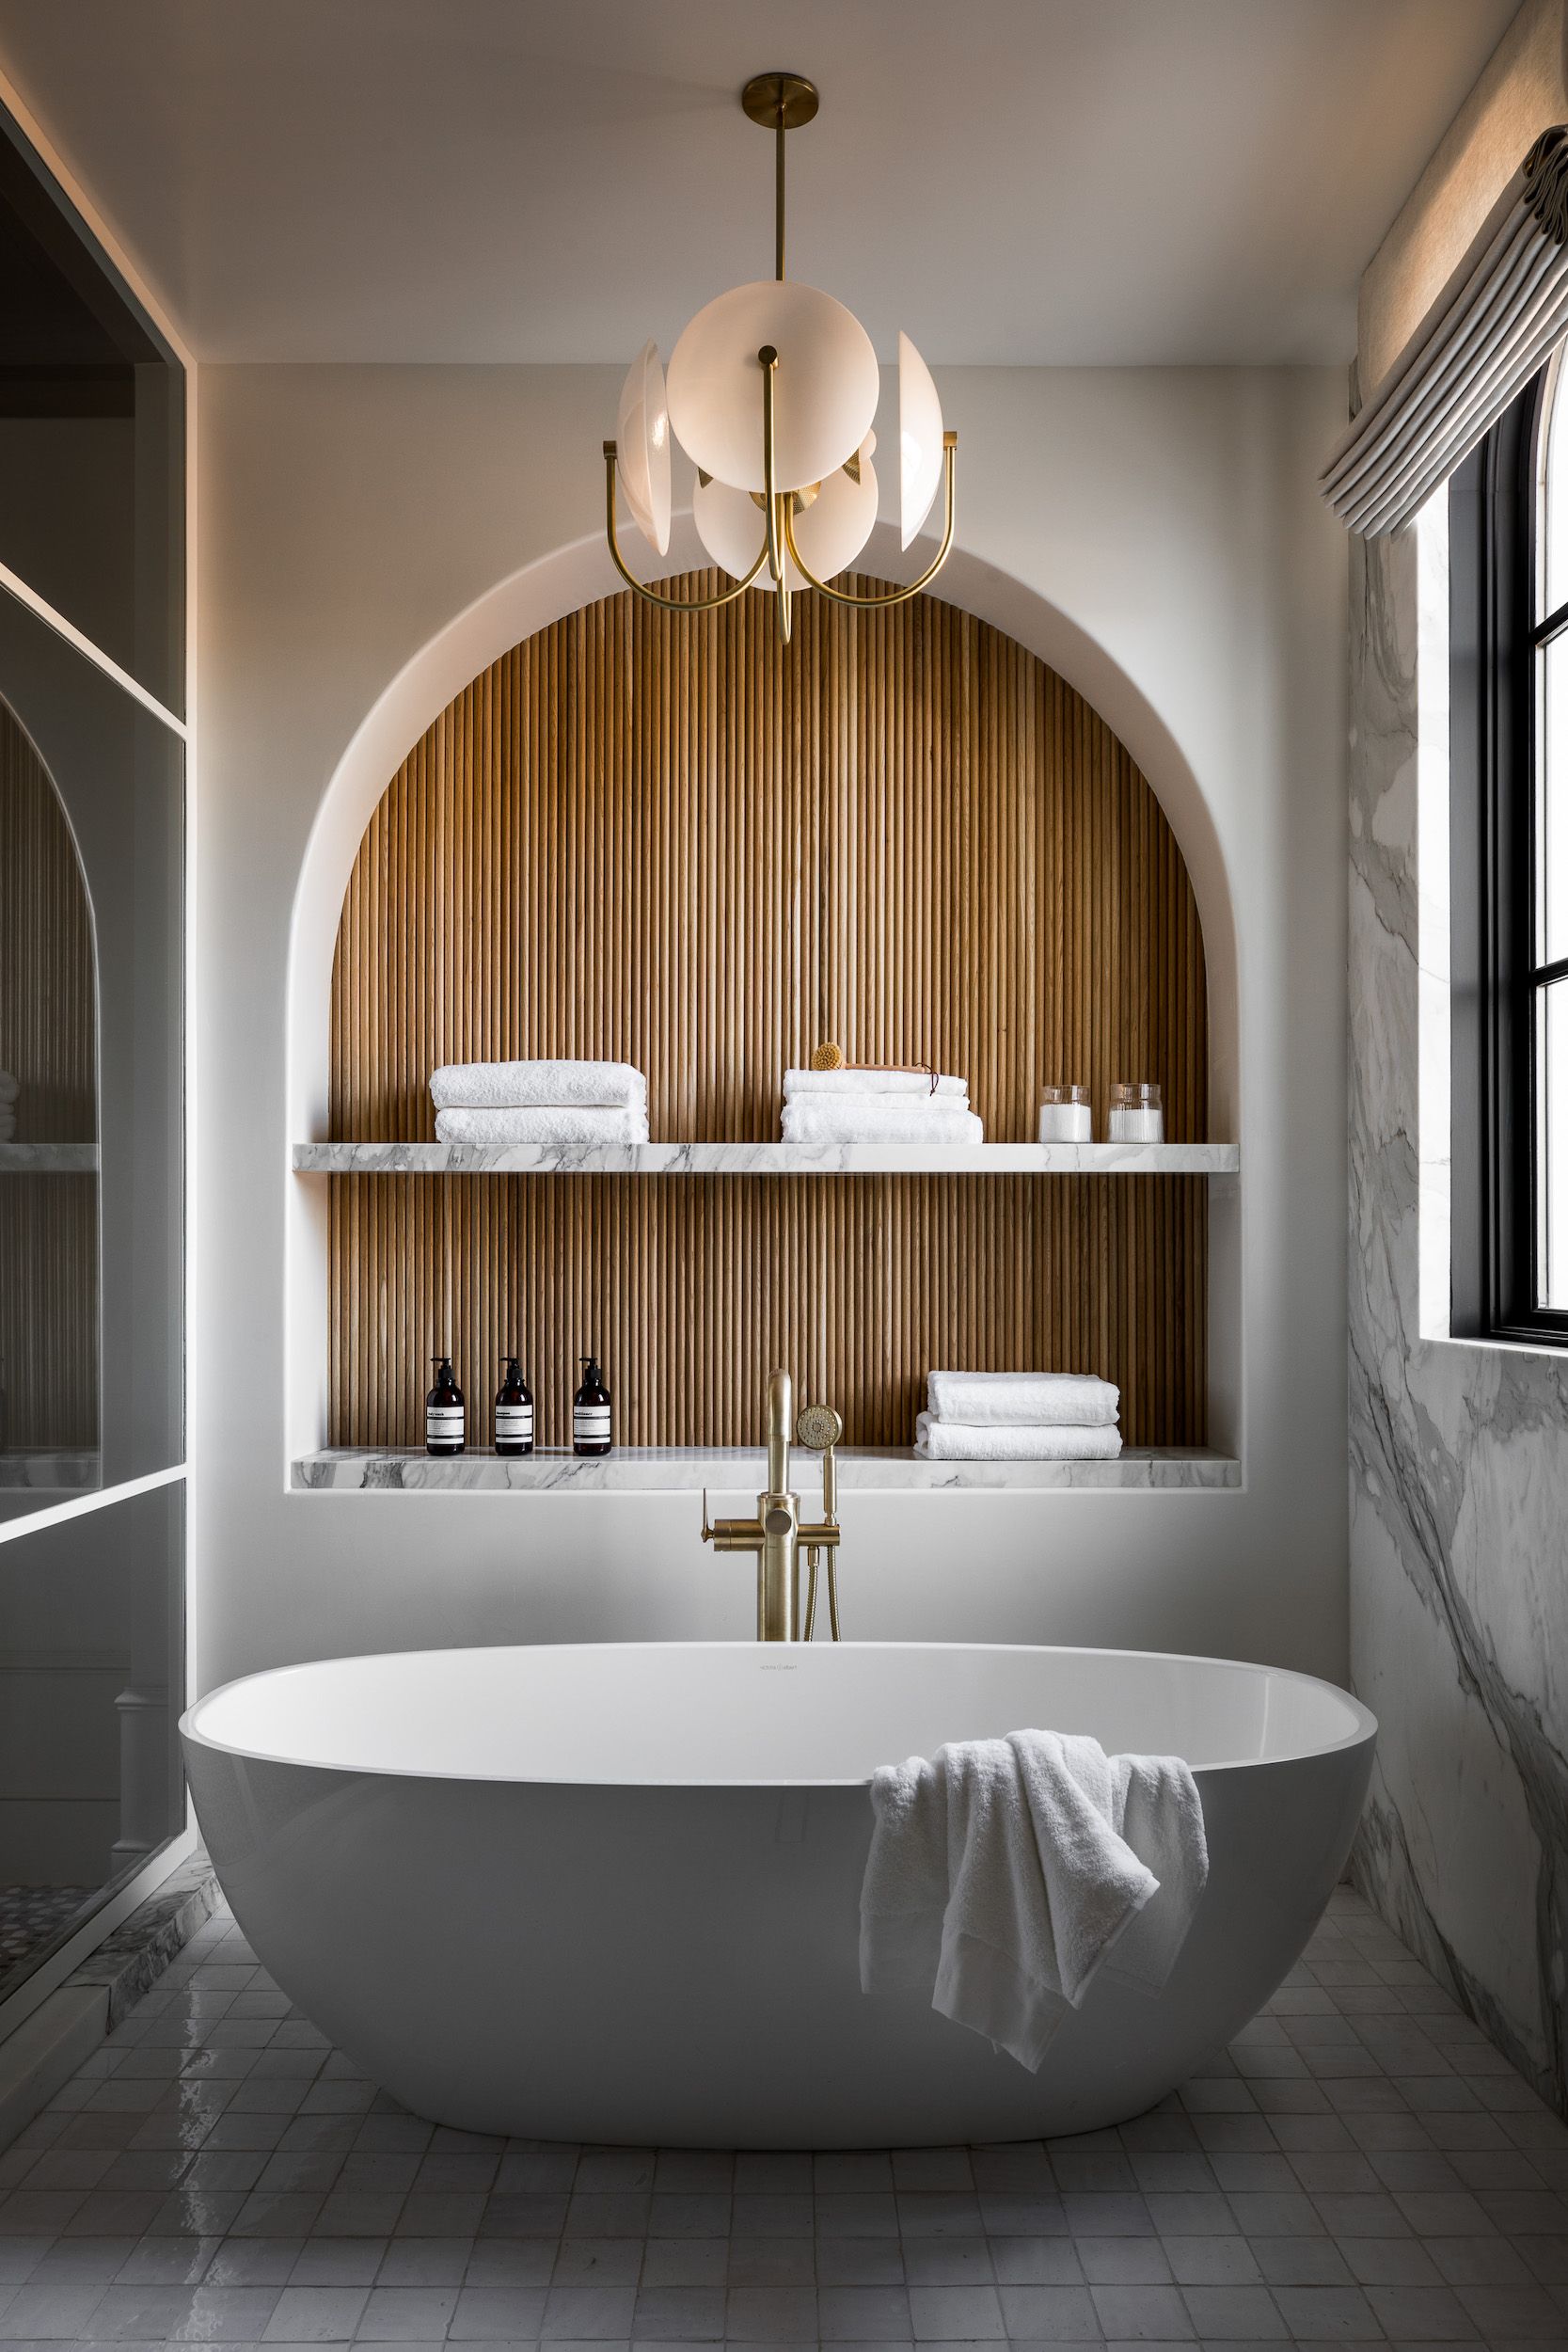 Bathroom Designs: Transforming Your Space into a Sanctuary